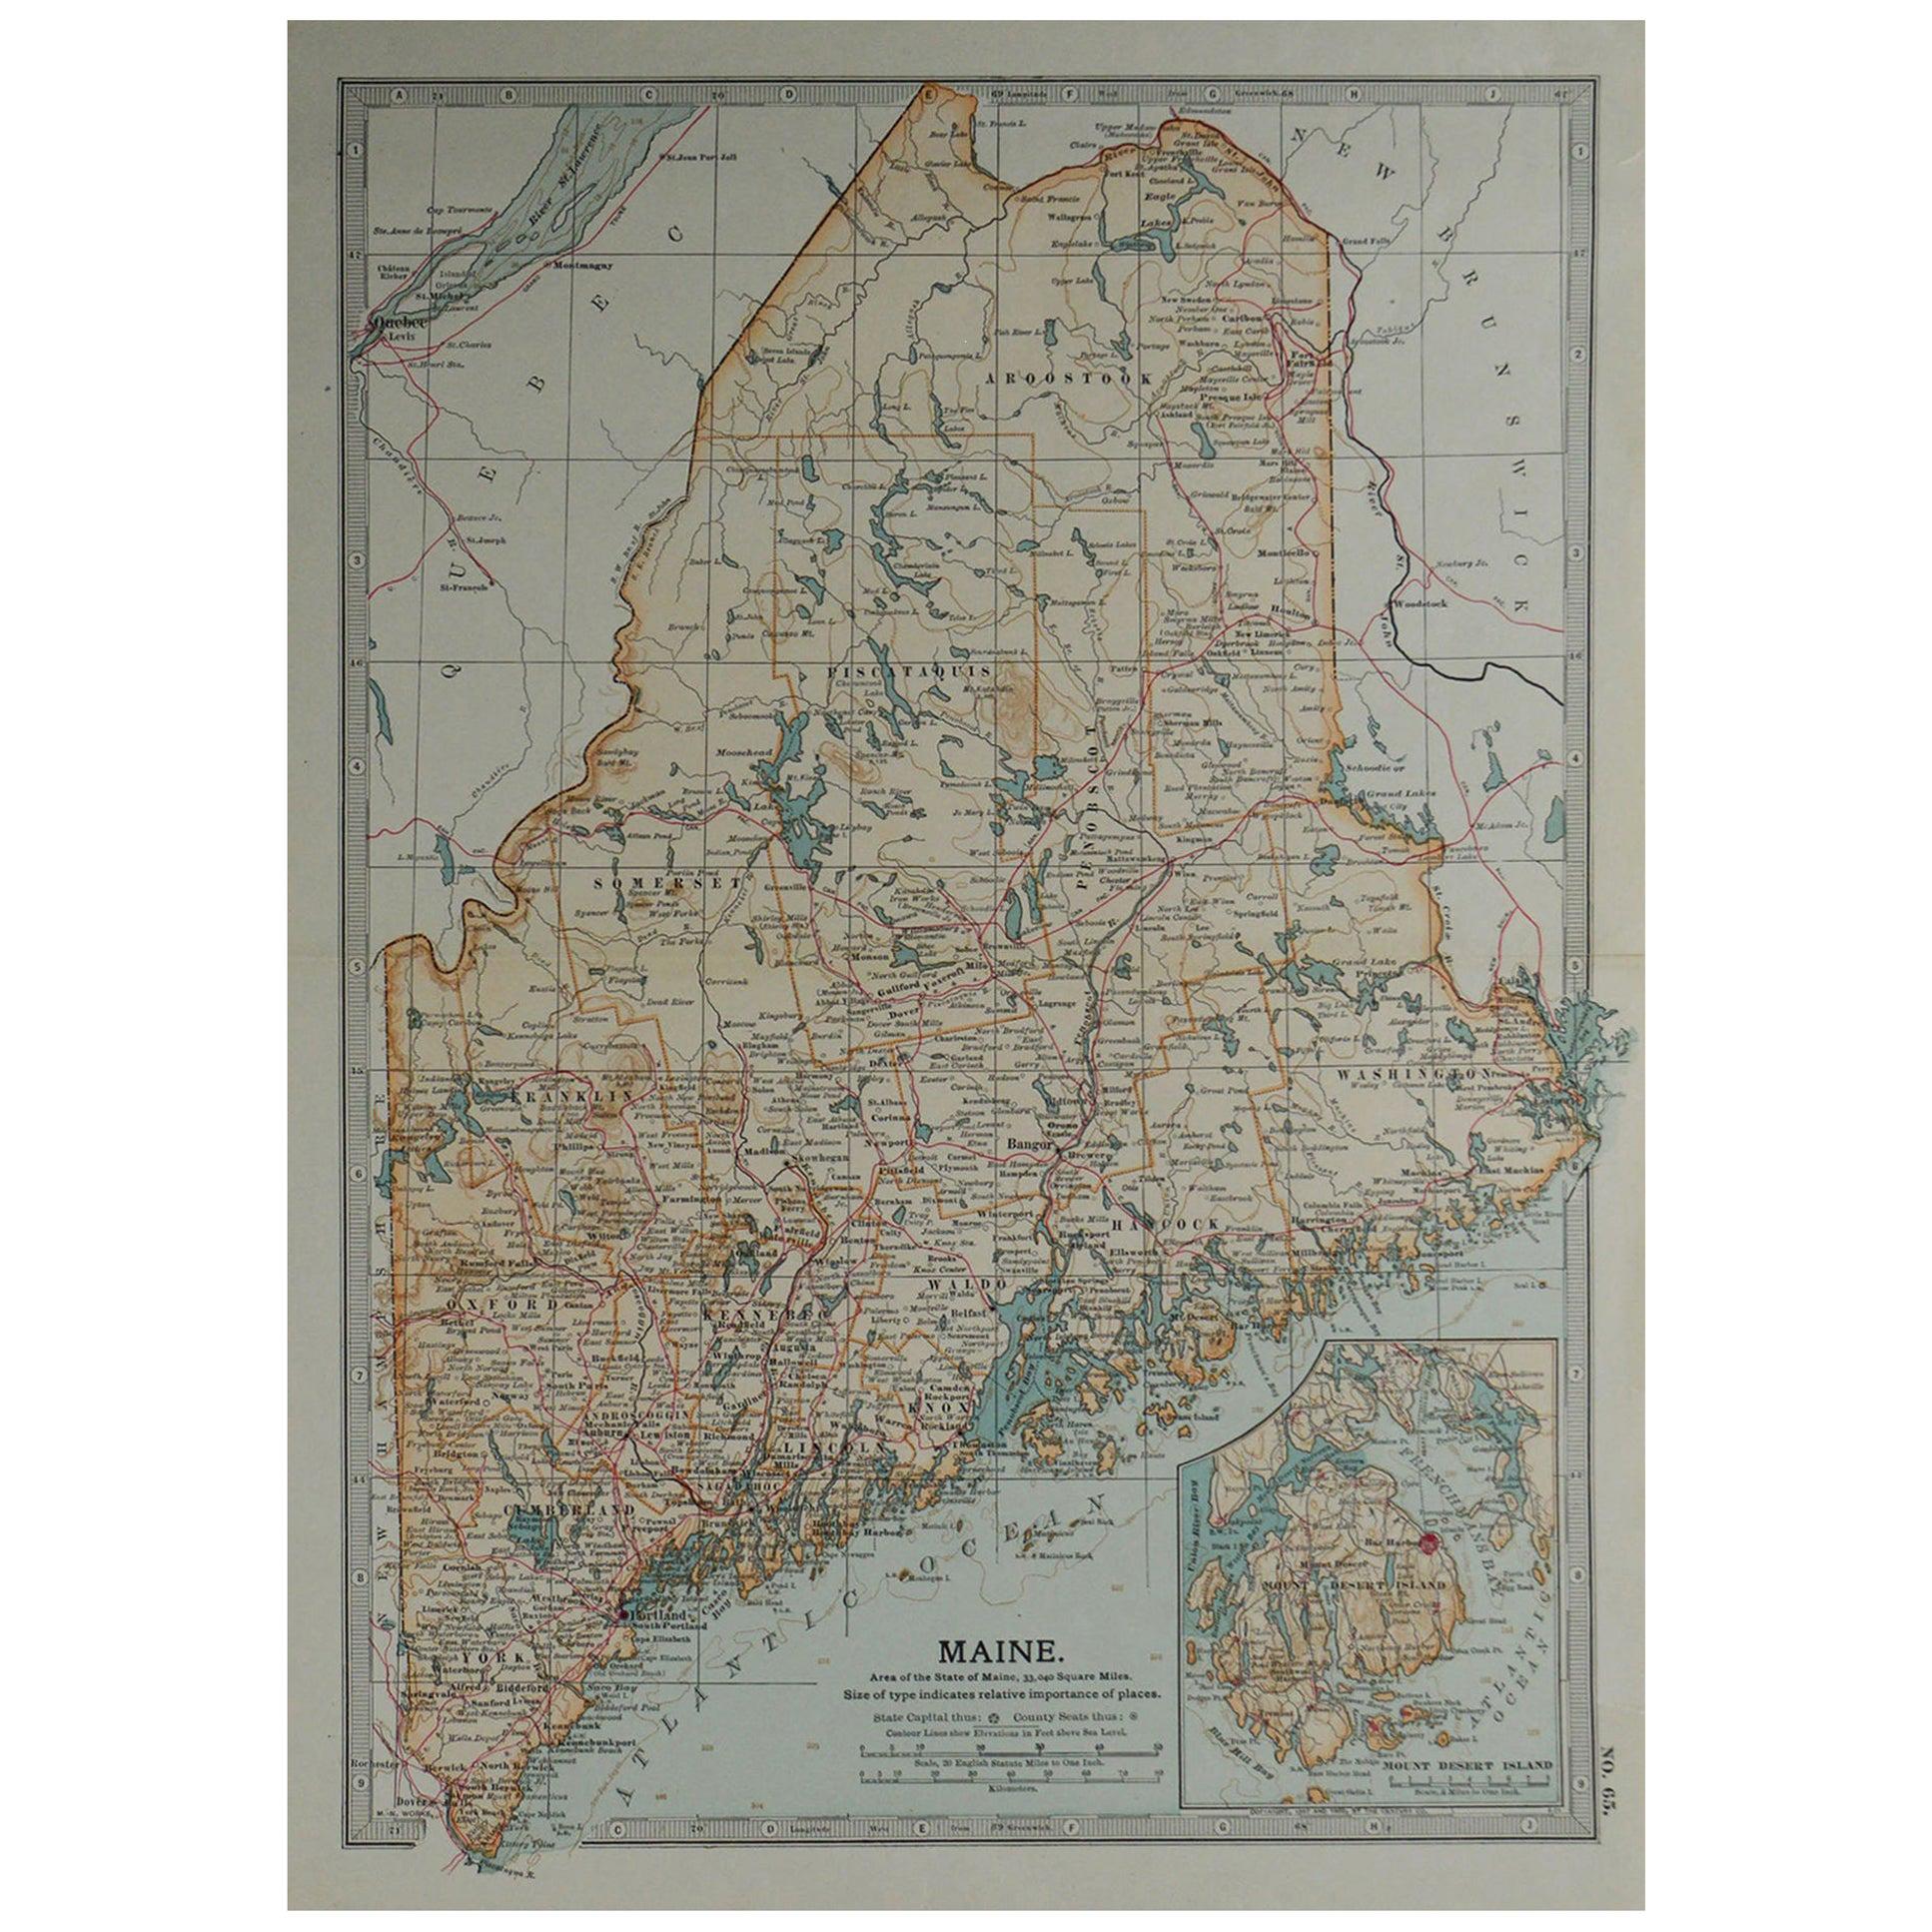 Original Antique Map of Maine, circa 1890